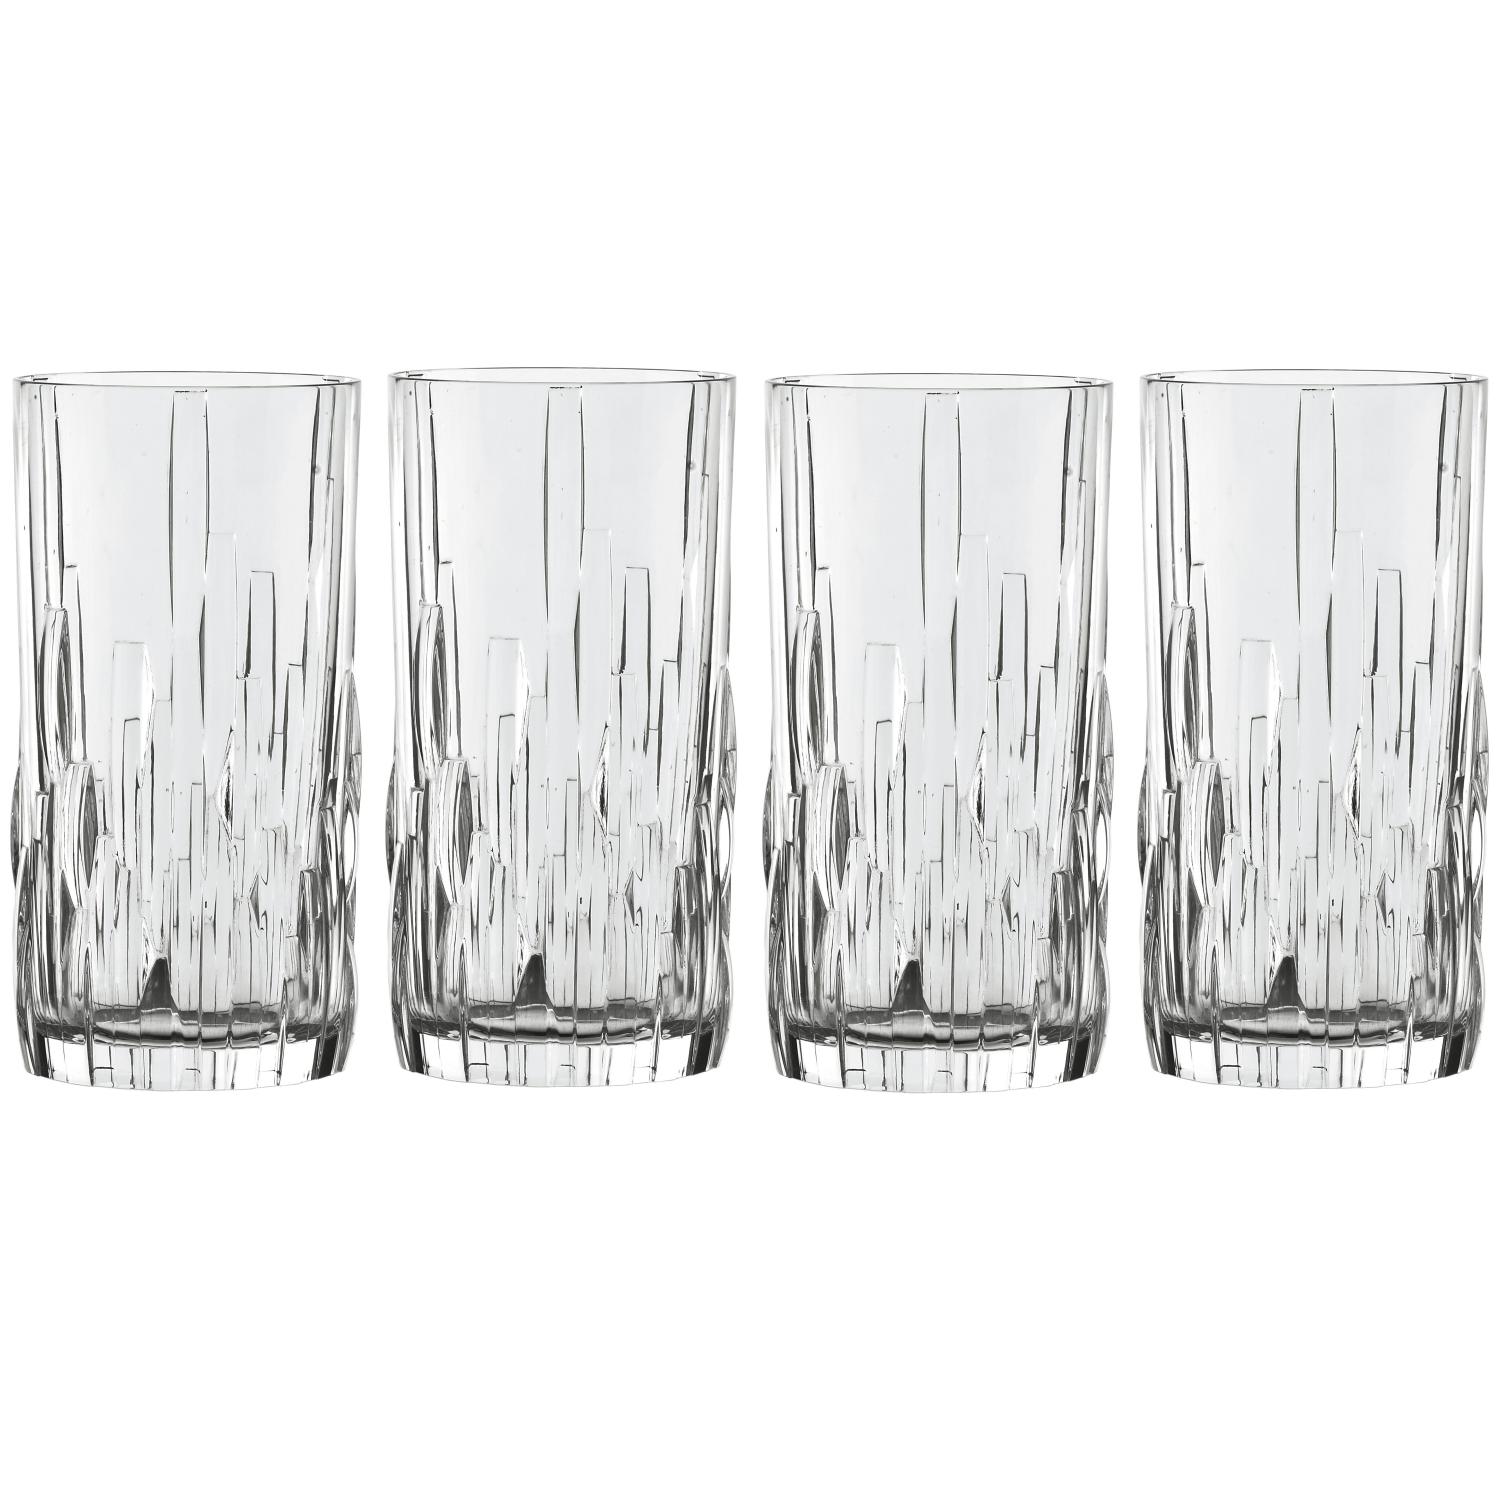 4 стакана для коктейлей Nachtmann Shu Fa Longdrink 360 мл (арт. 98064)